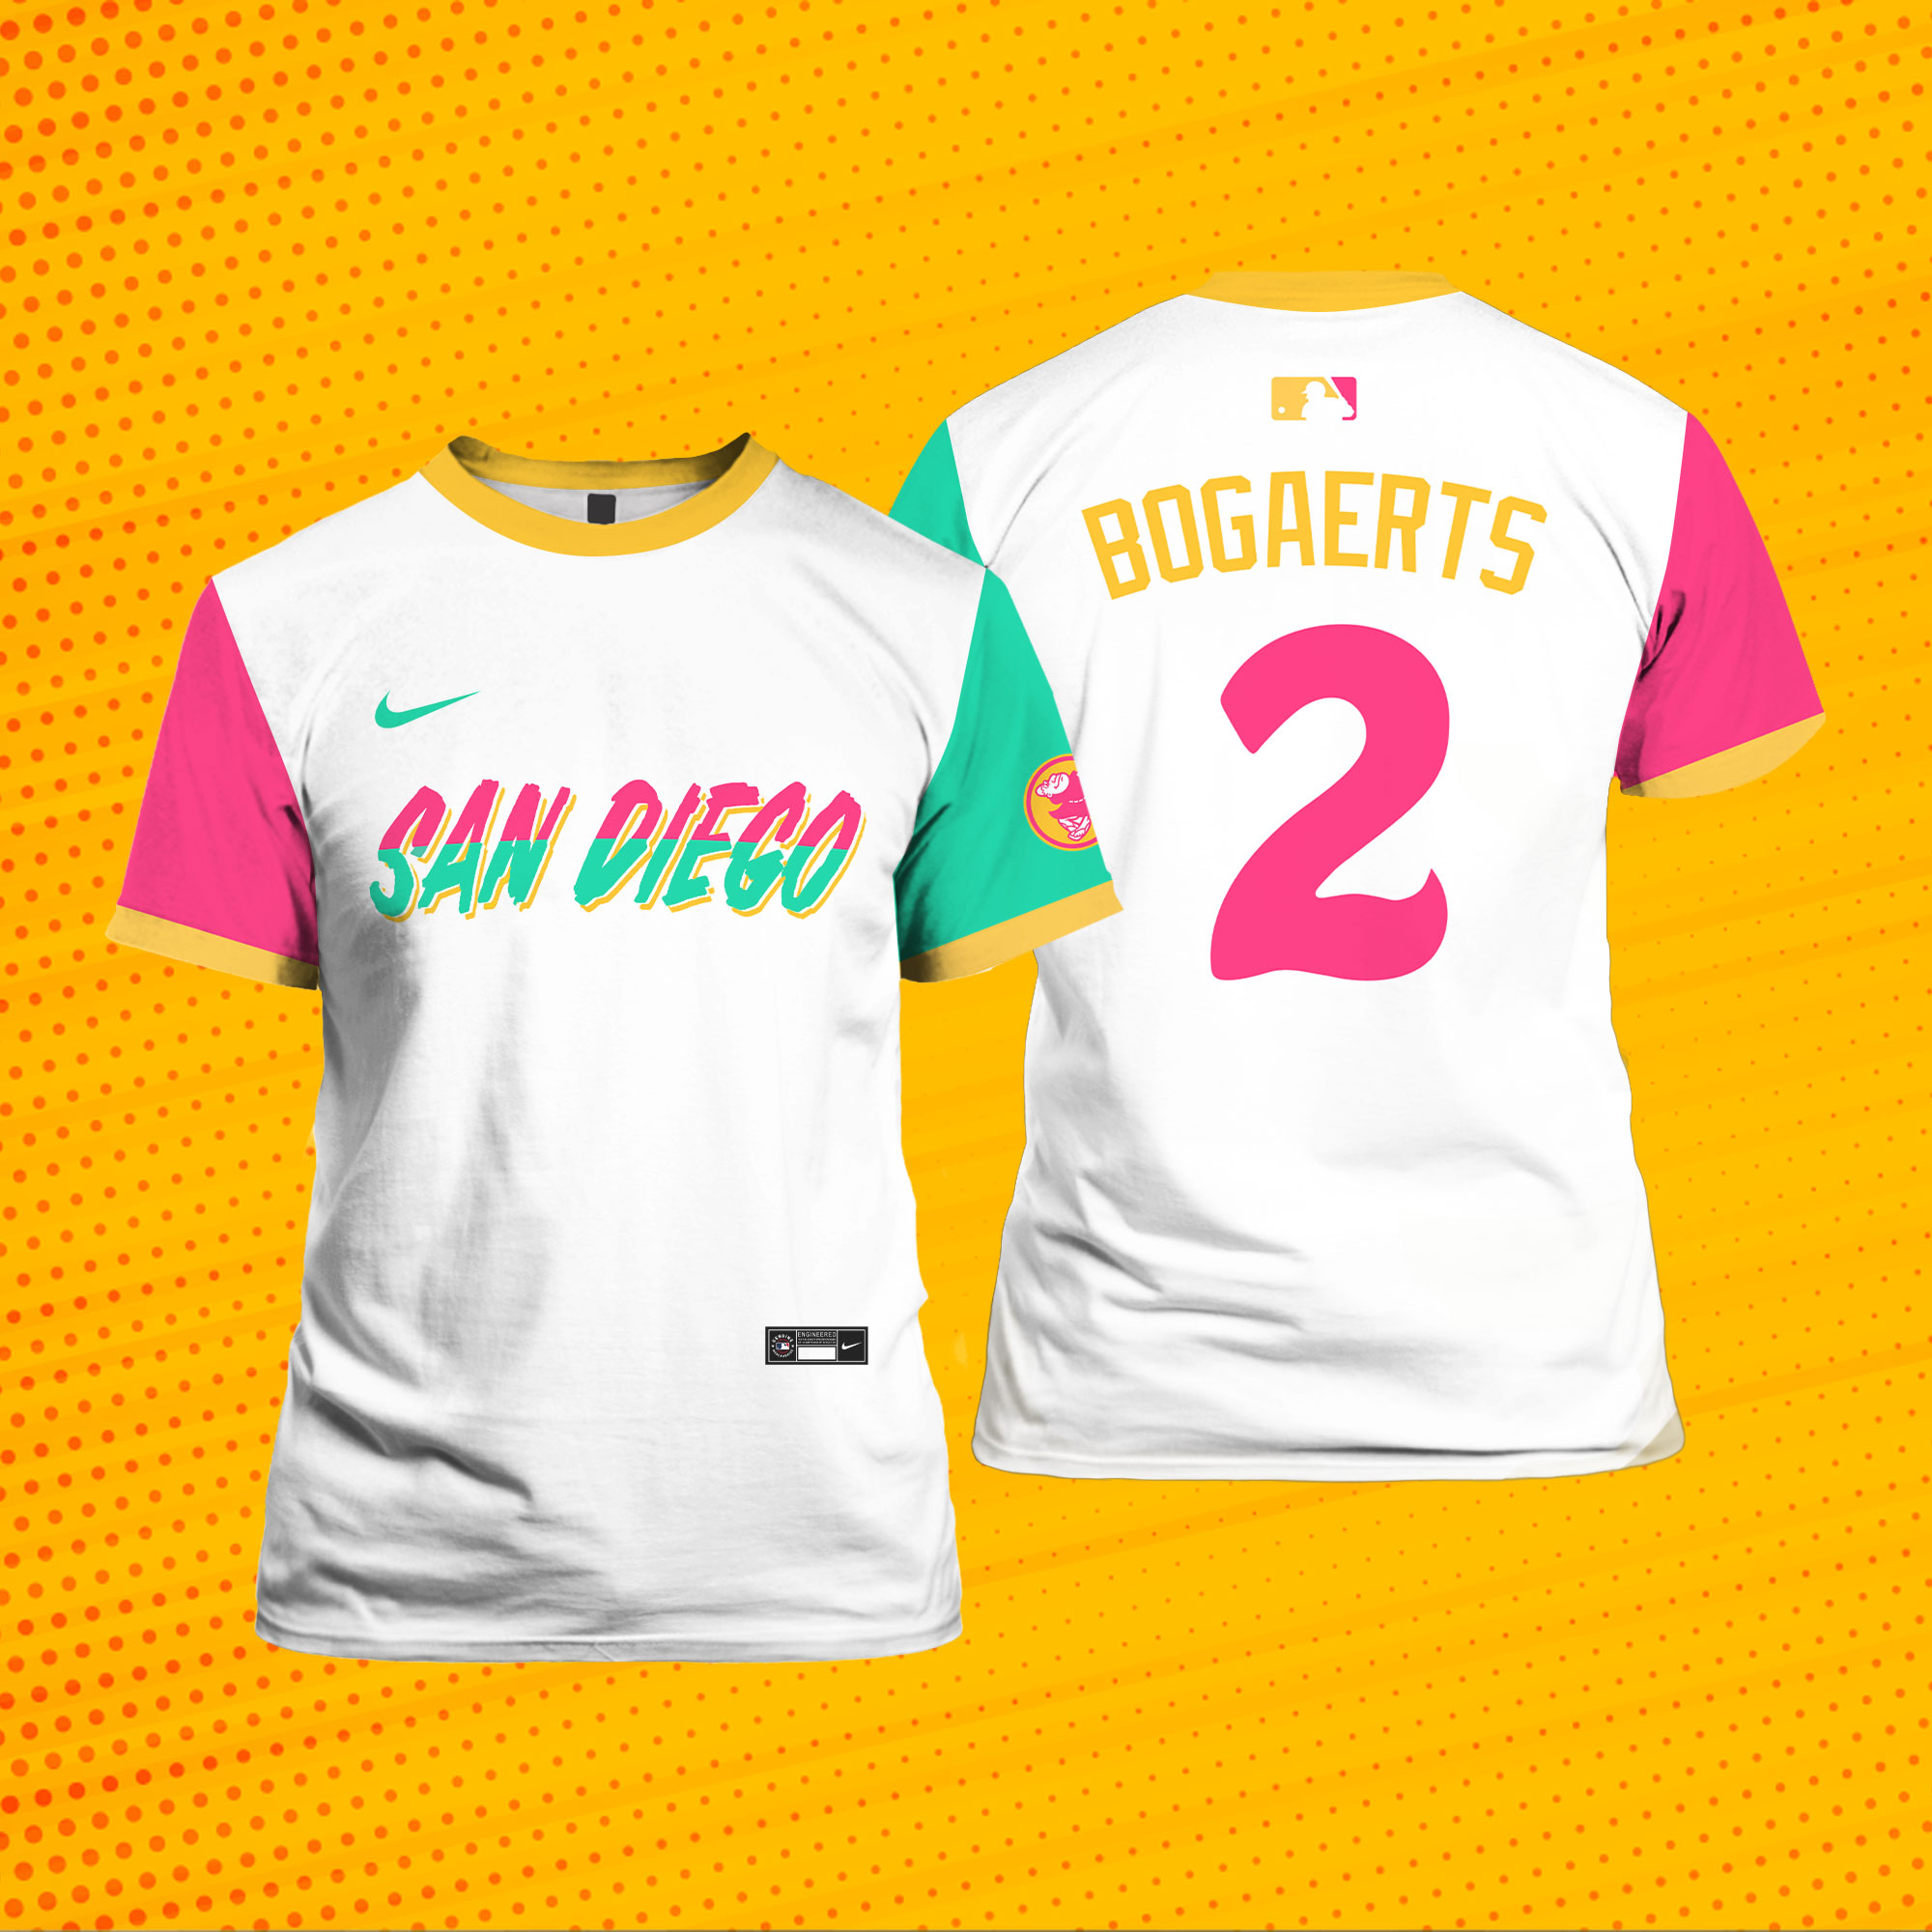 Padres player jersey merchandise